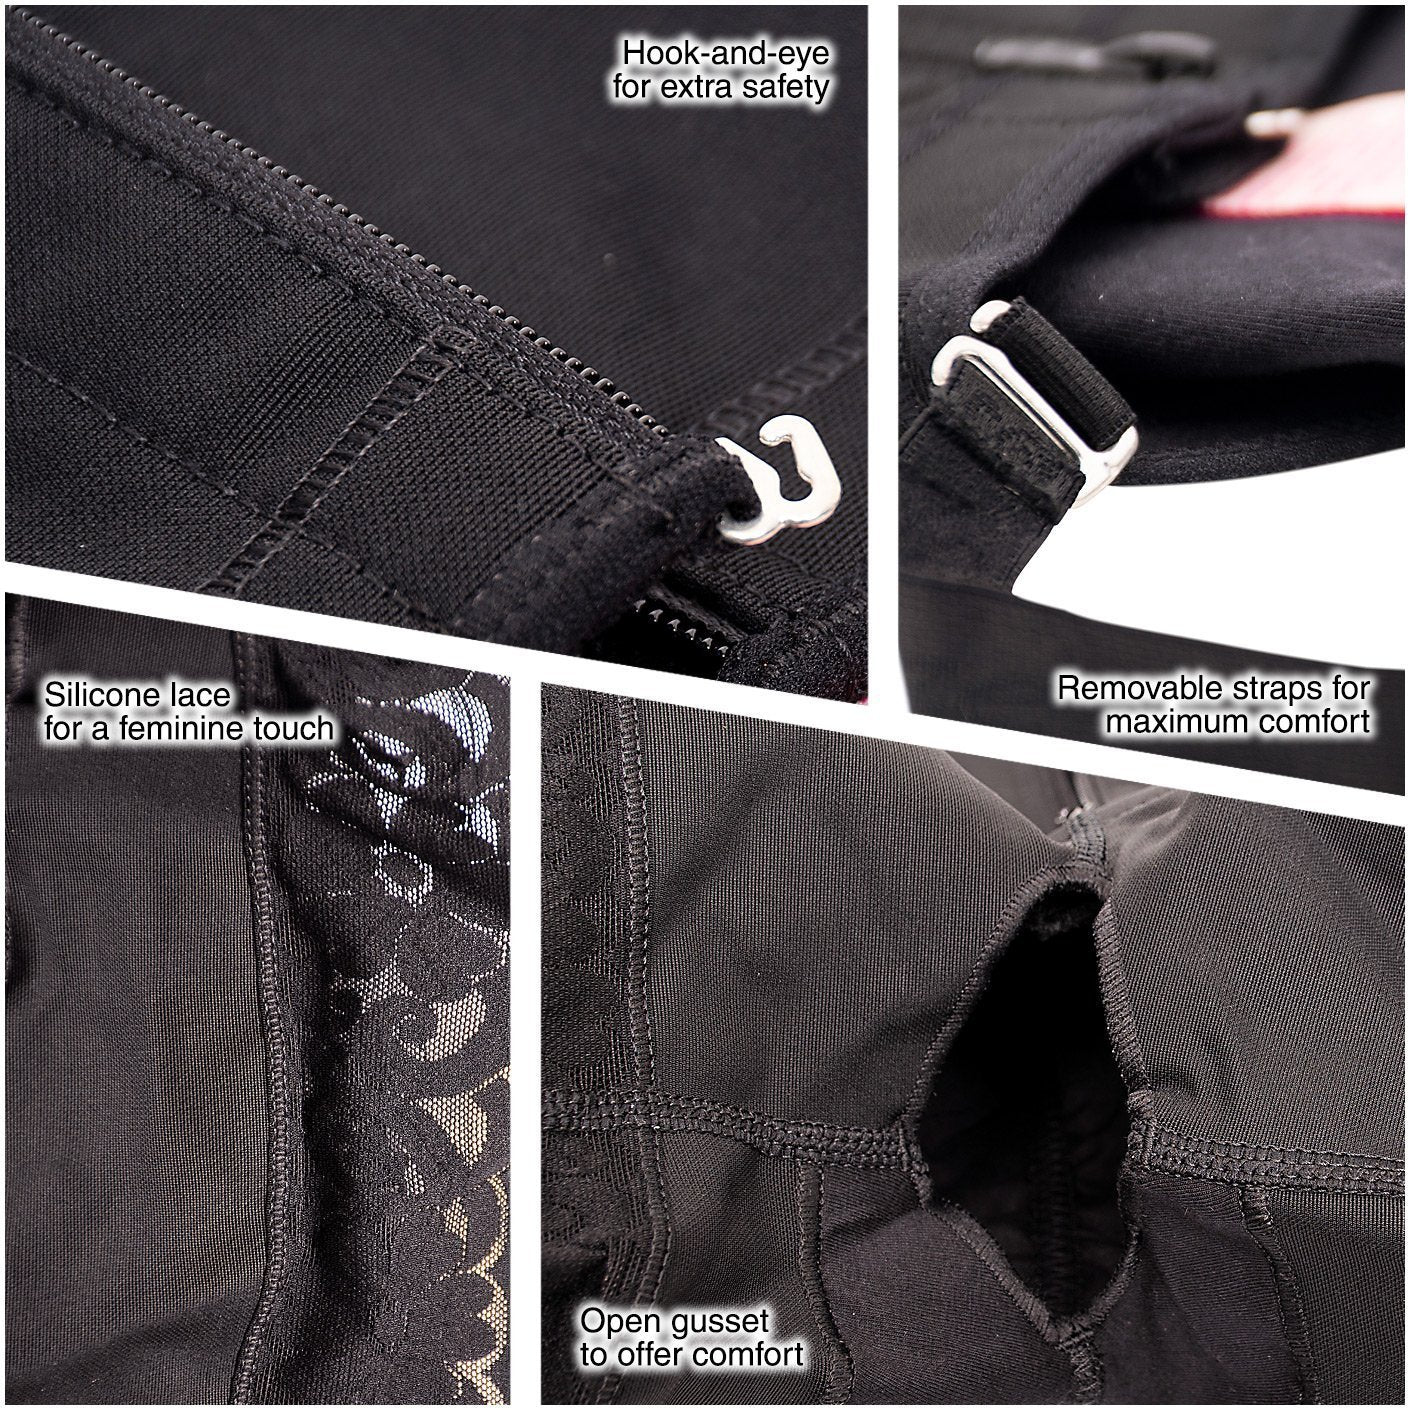 FAJAS SALOME 0215 Colombian Shapewear Strapless Butt Lifter - New England Supplier